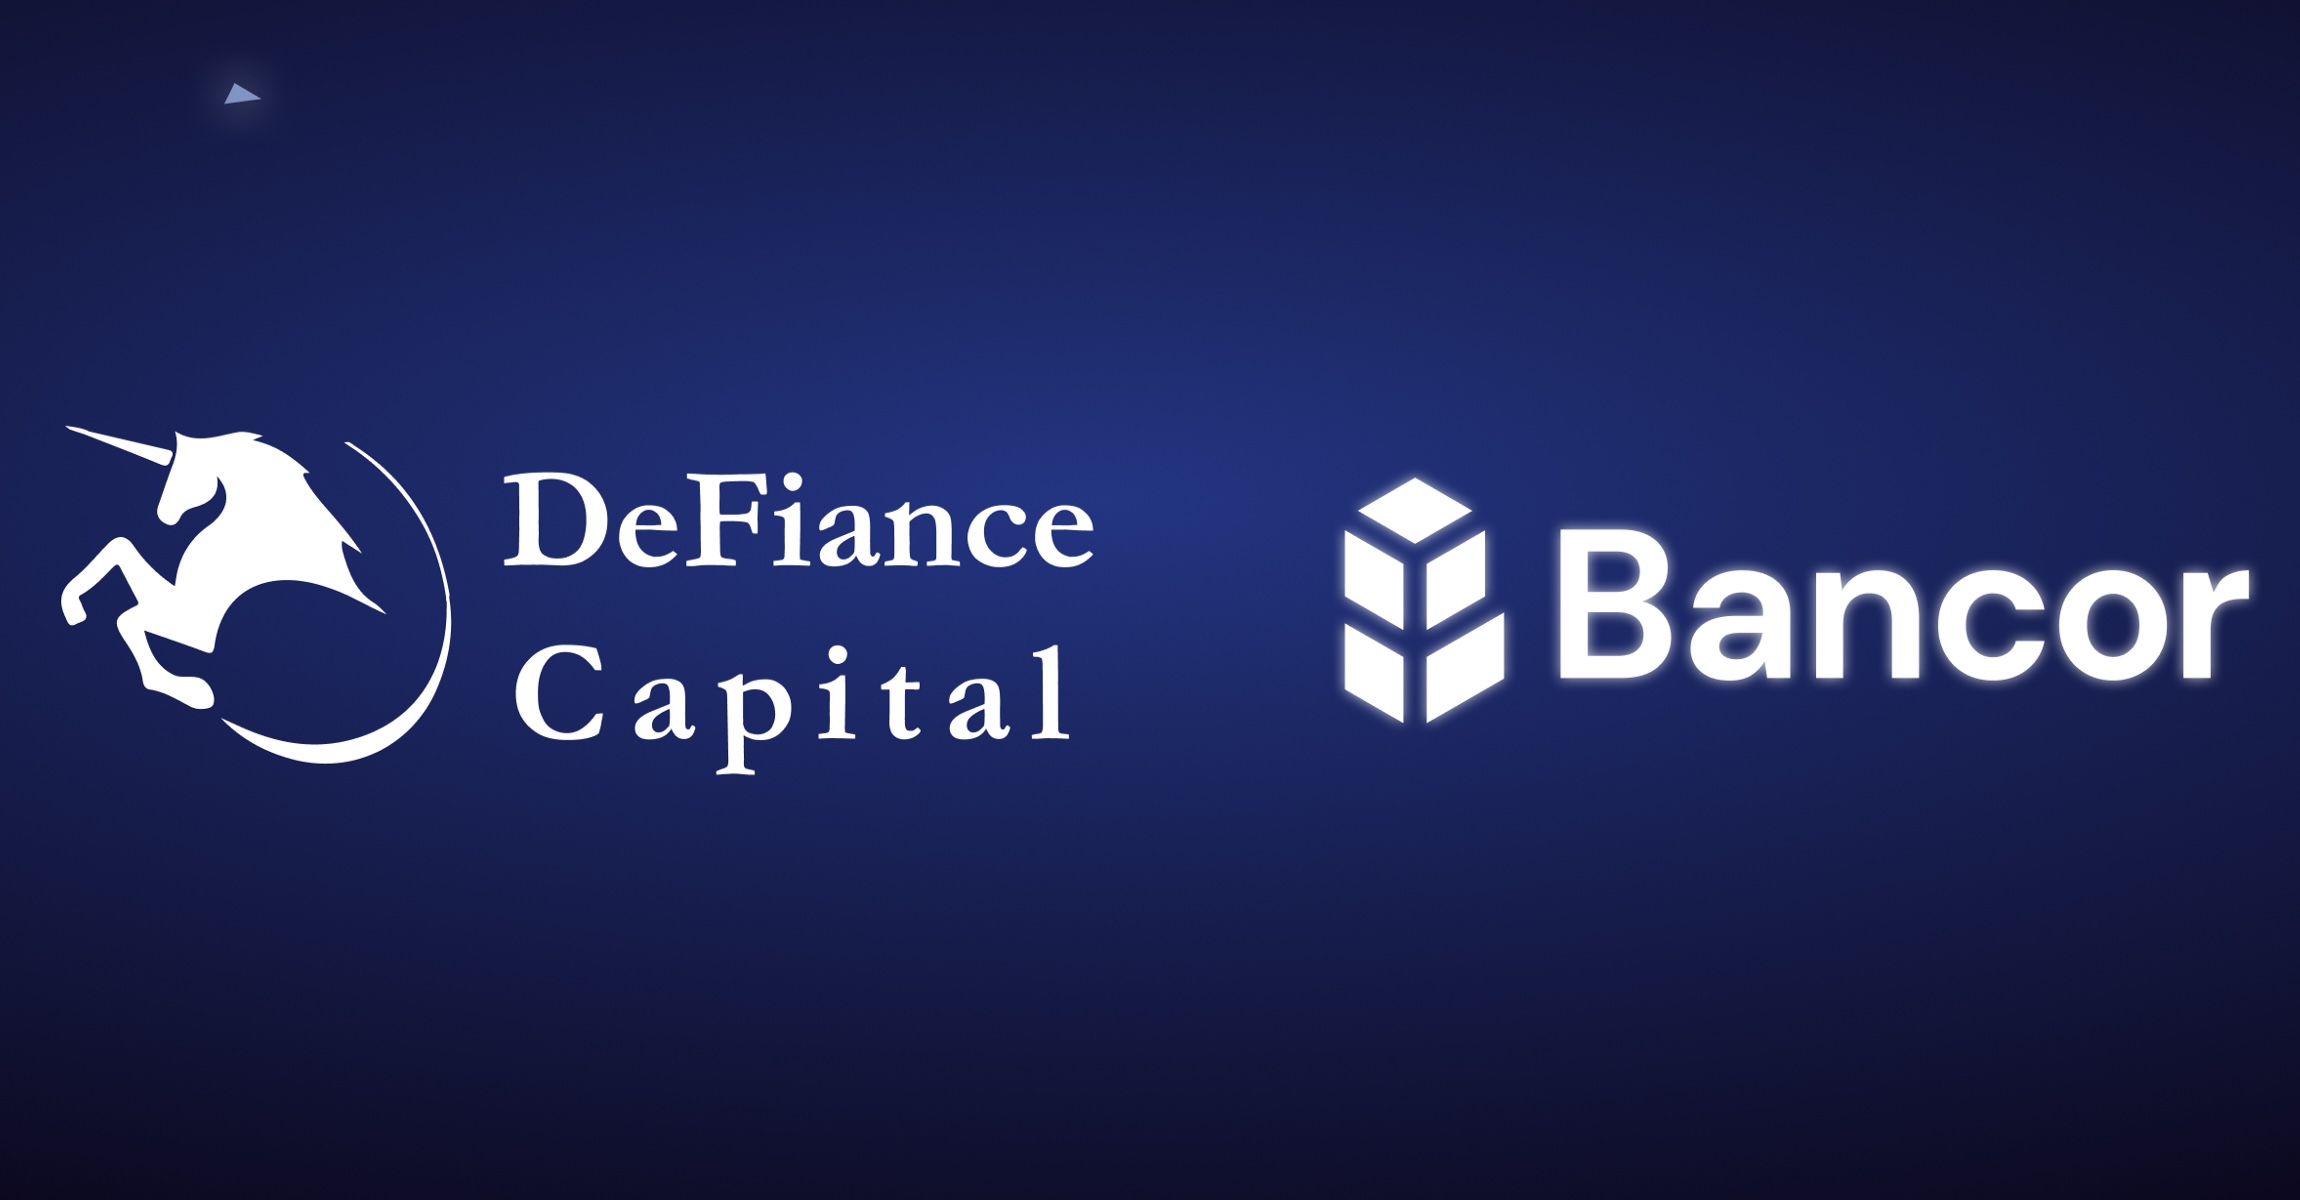 DeFiance Capital Joins Bancor Protocol as Strategic Advisors